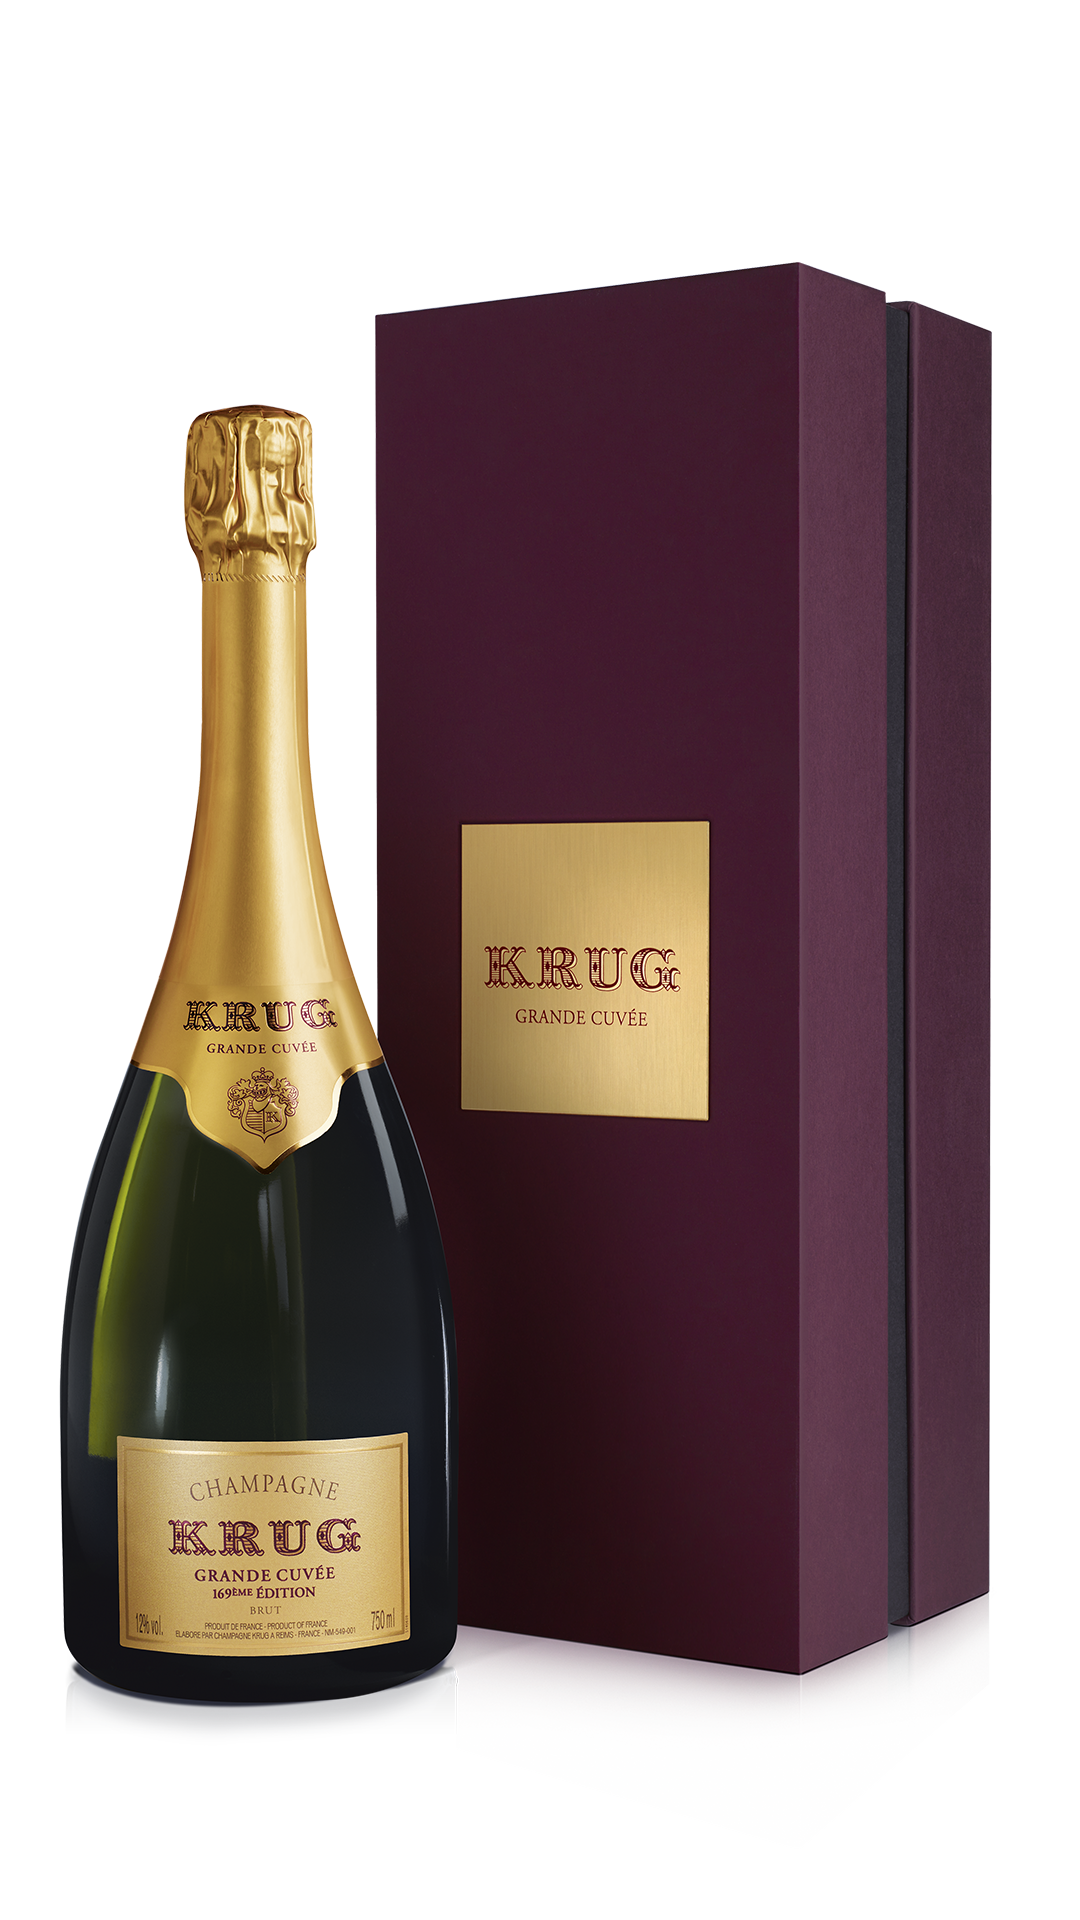 CHAMPAGNE KRUG BRUT GRANDE CUVEE NV 169TH EDITION 750 ML – Bleu Provence  Fine Wines